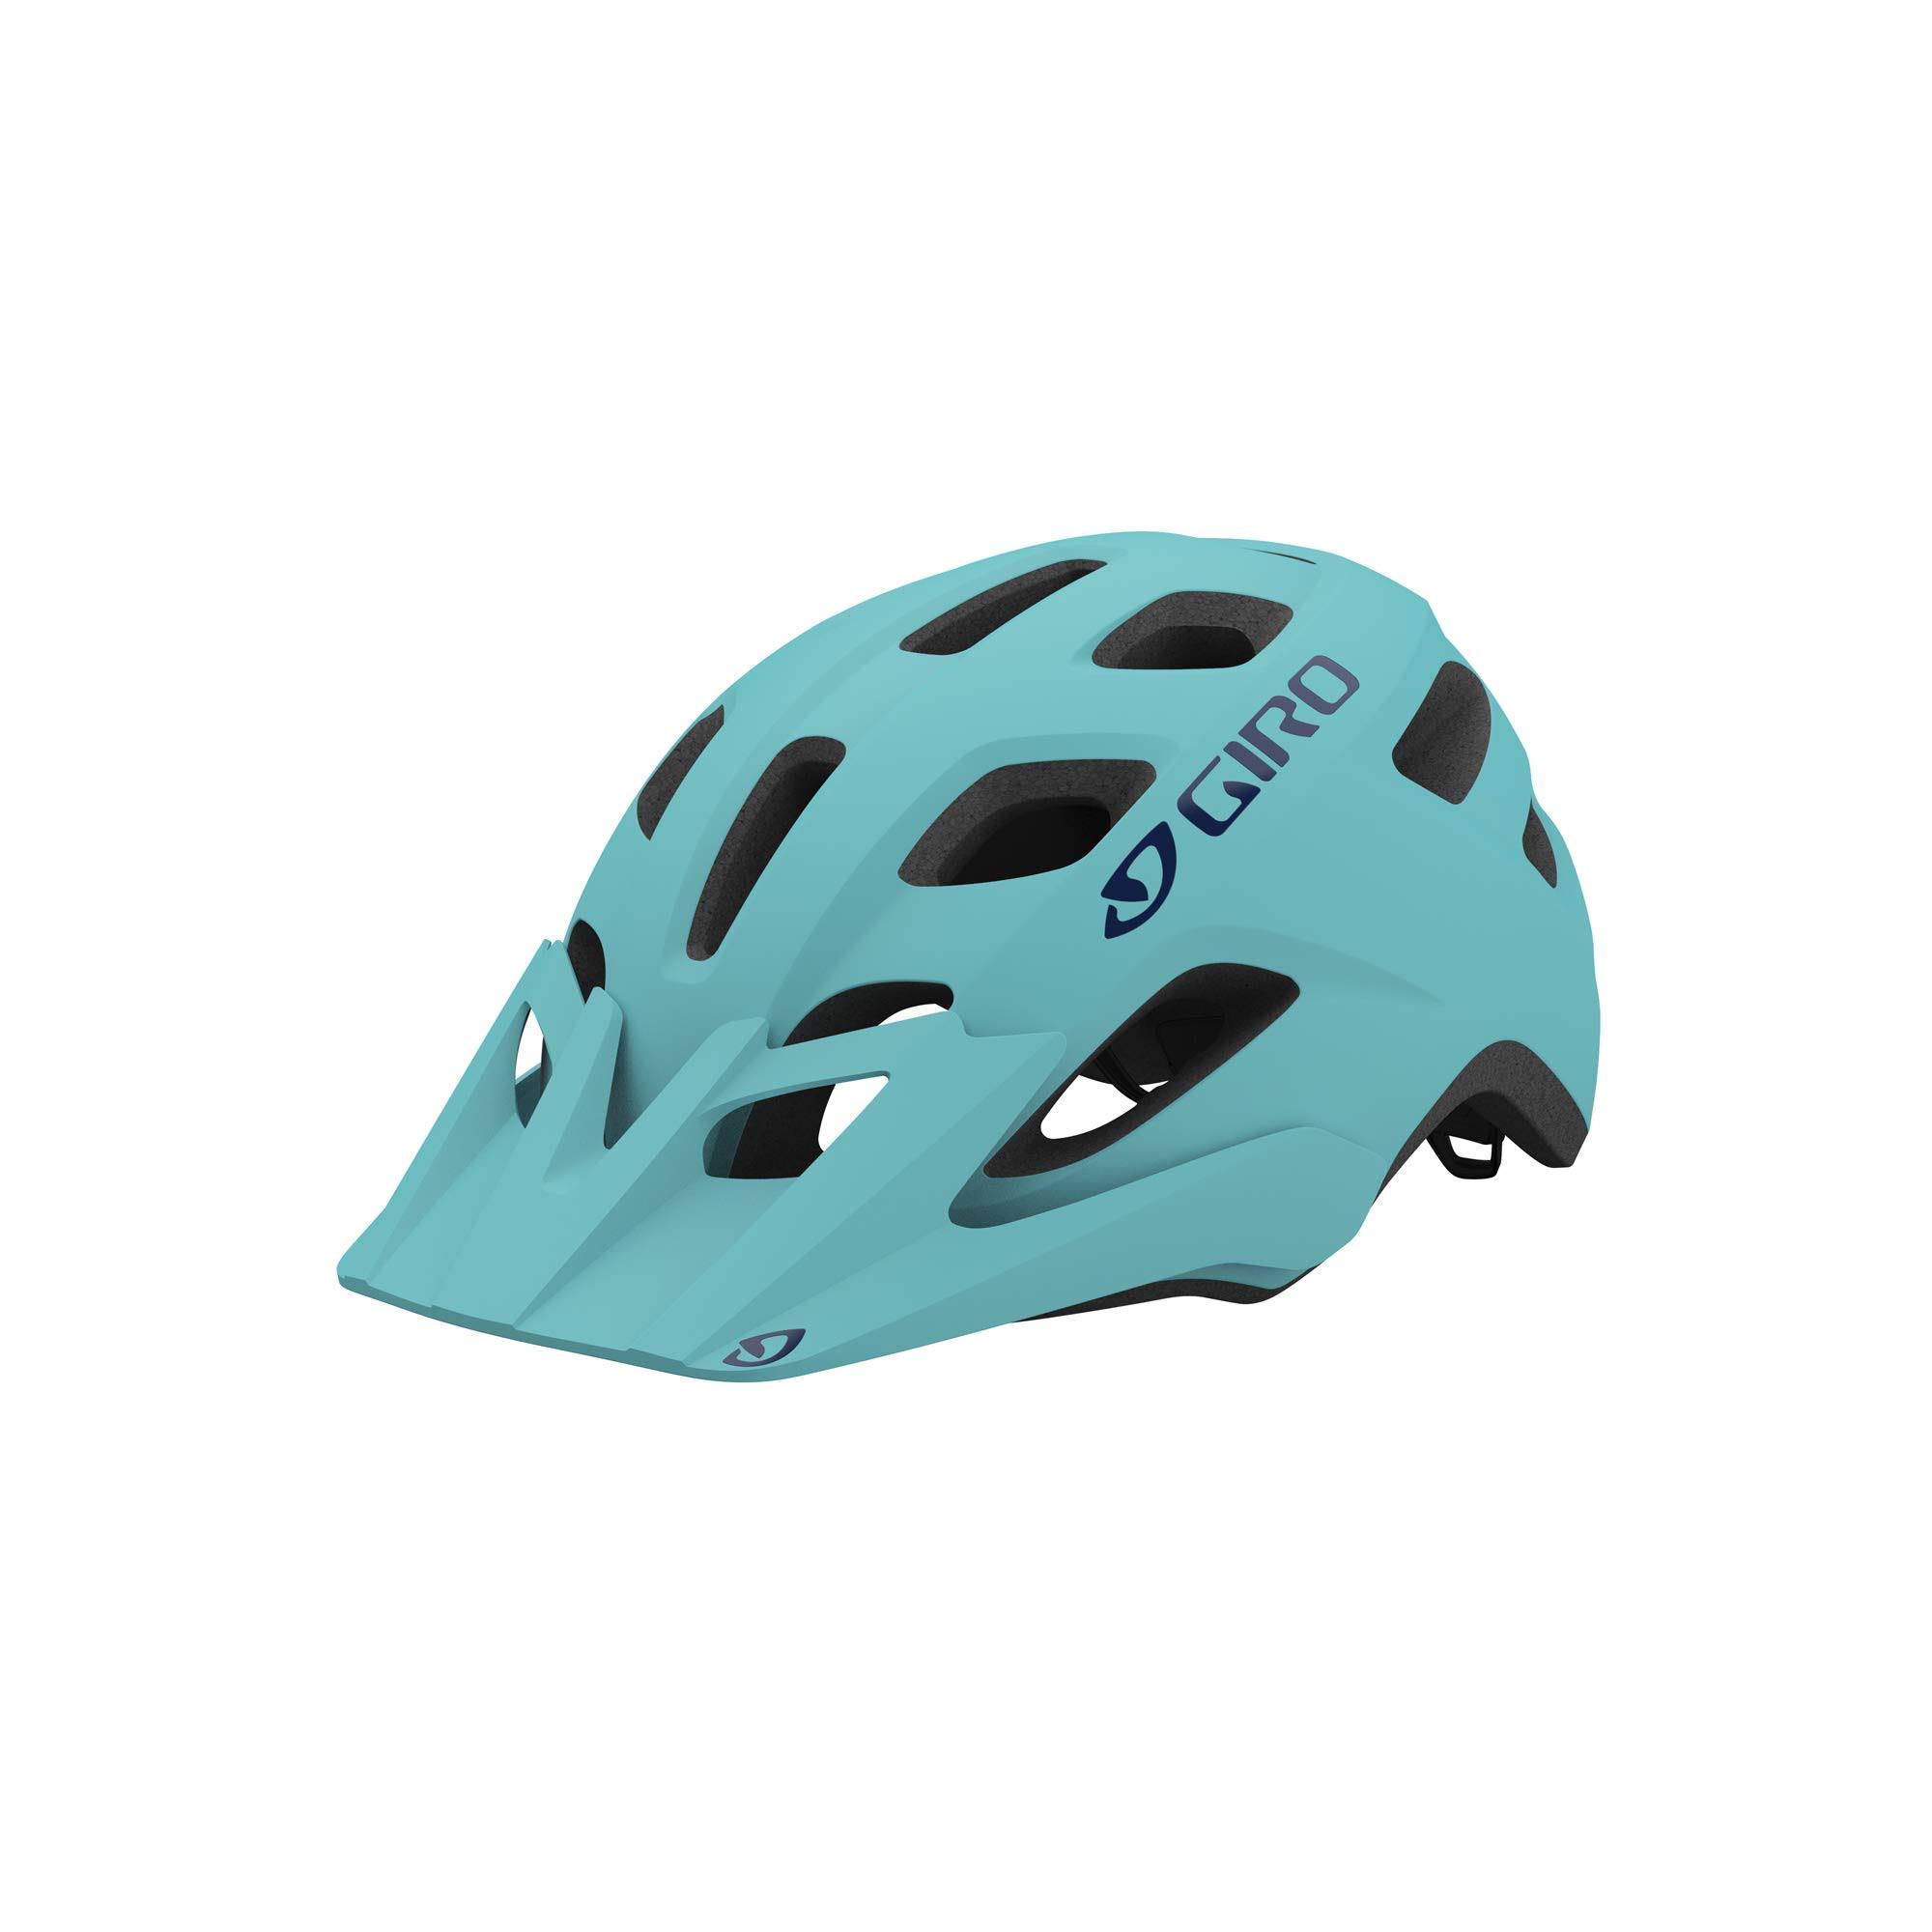 Giro Tremor MIPS Helmet's Adjust Fit System Roc Loc Sport Vents For Breathability, Glacier / Universal Child